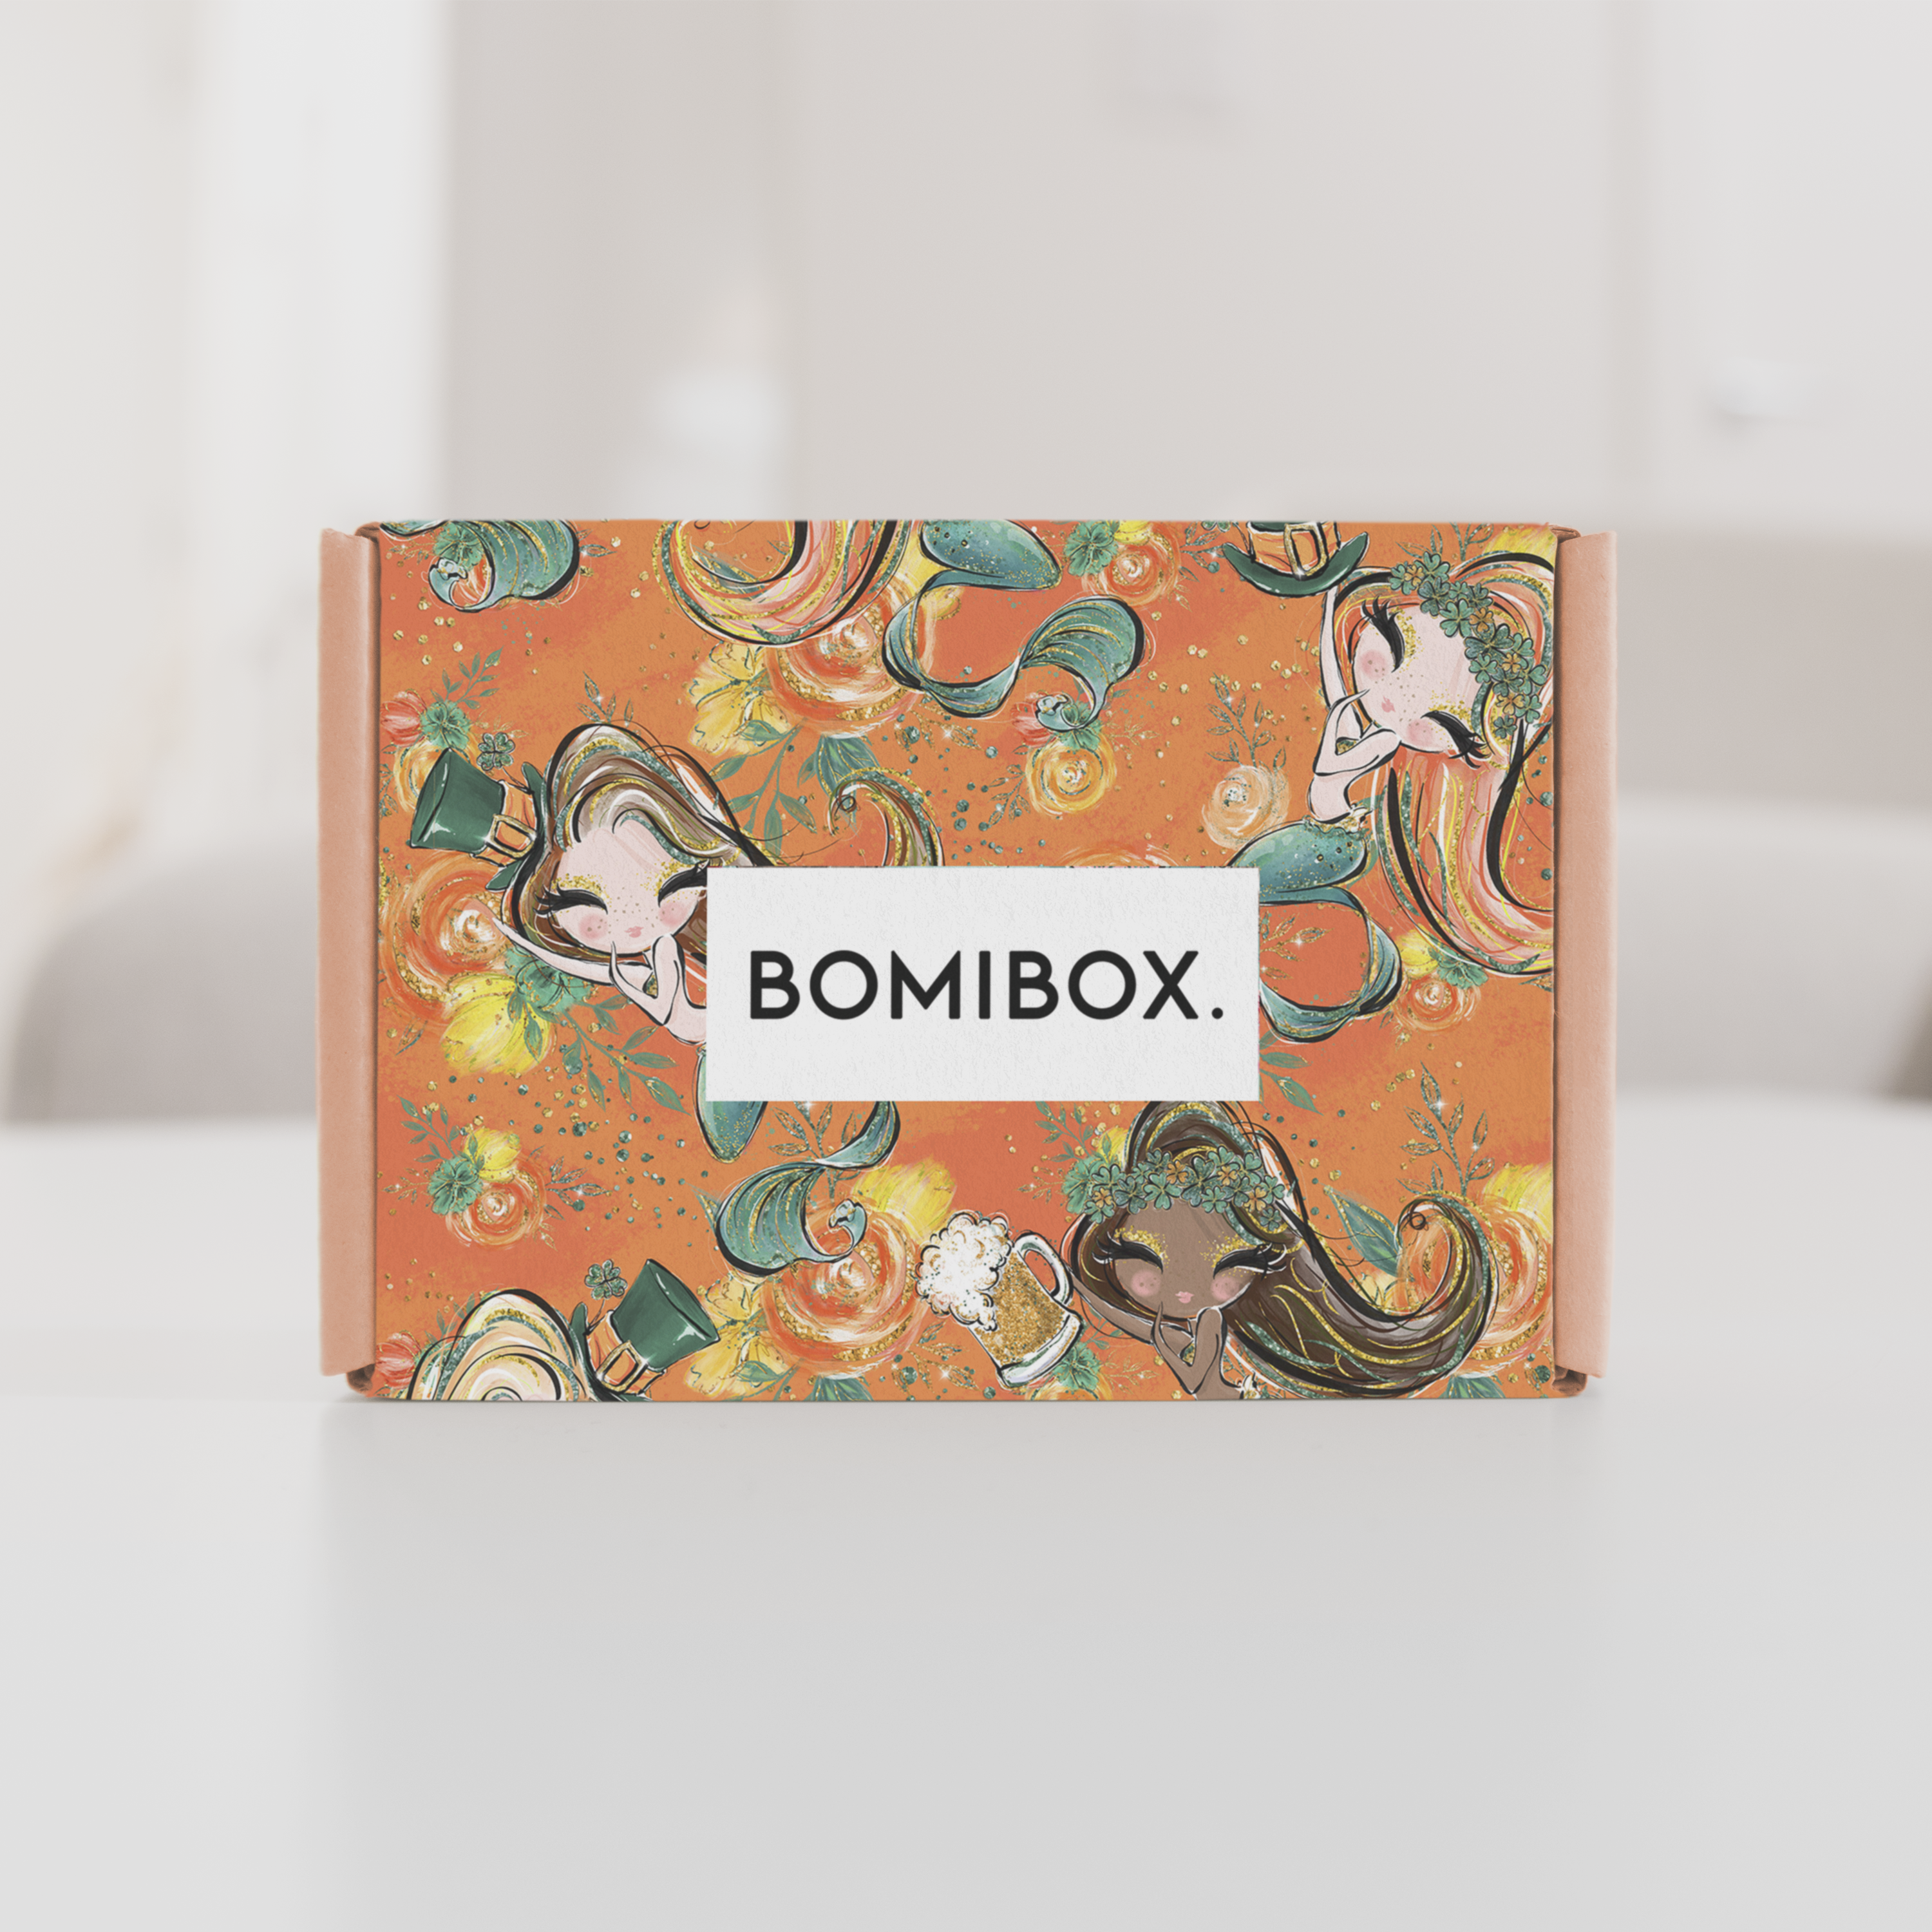 Past Boxes-Bomibox February 2020 - Korean Beauty Box Monthly Korean Skincare Subscription